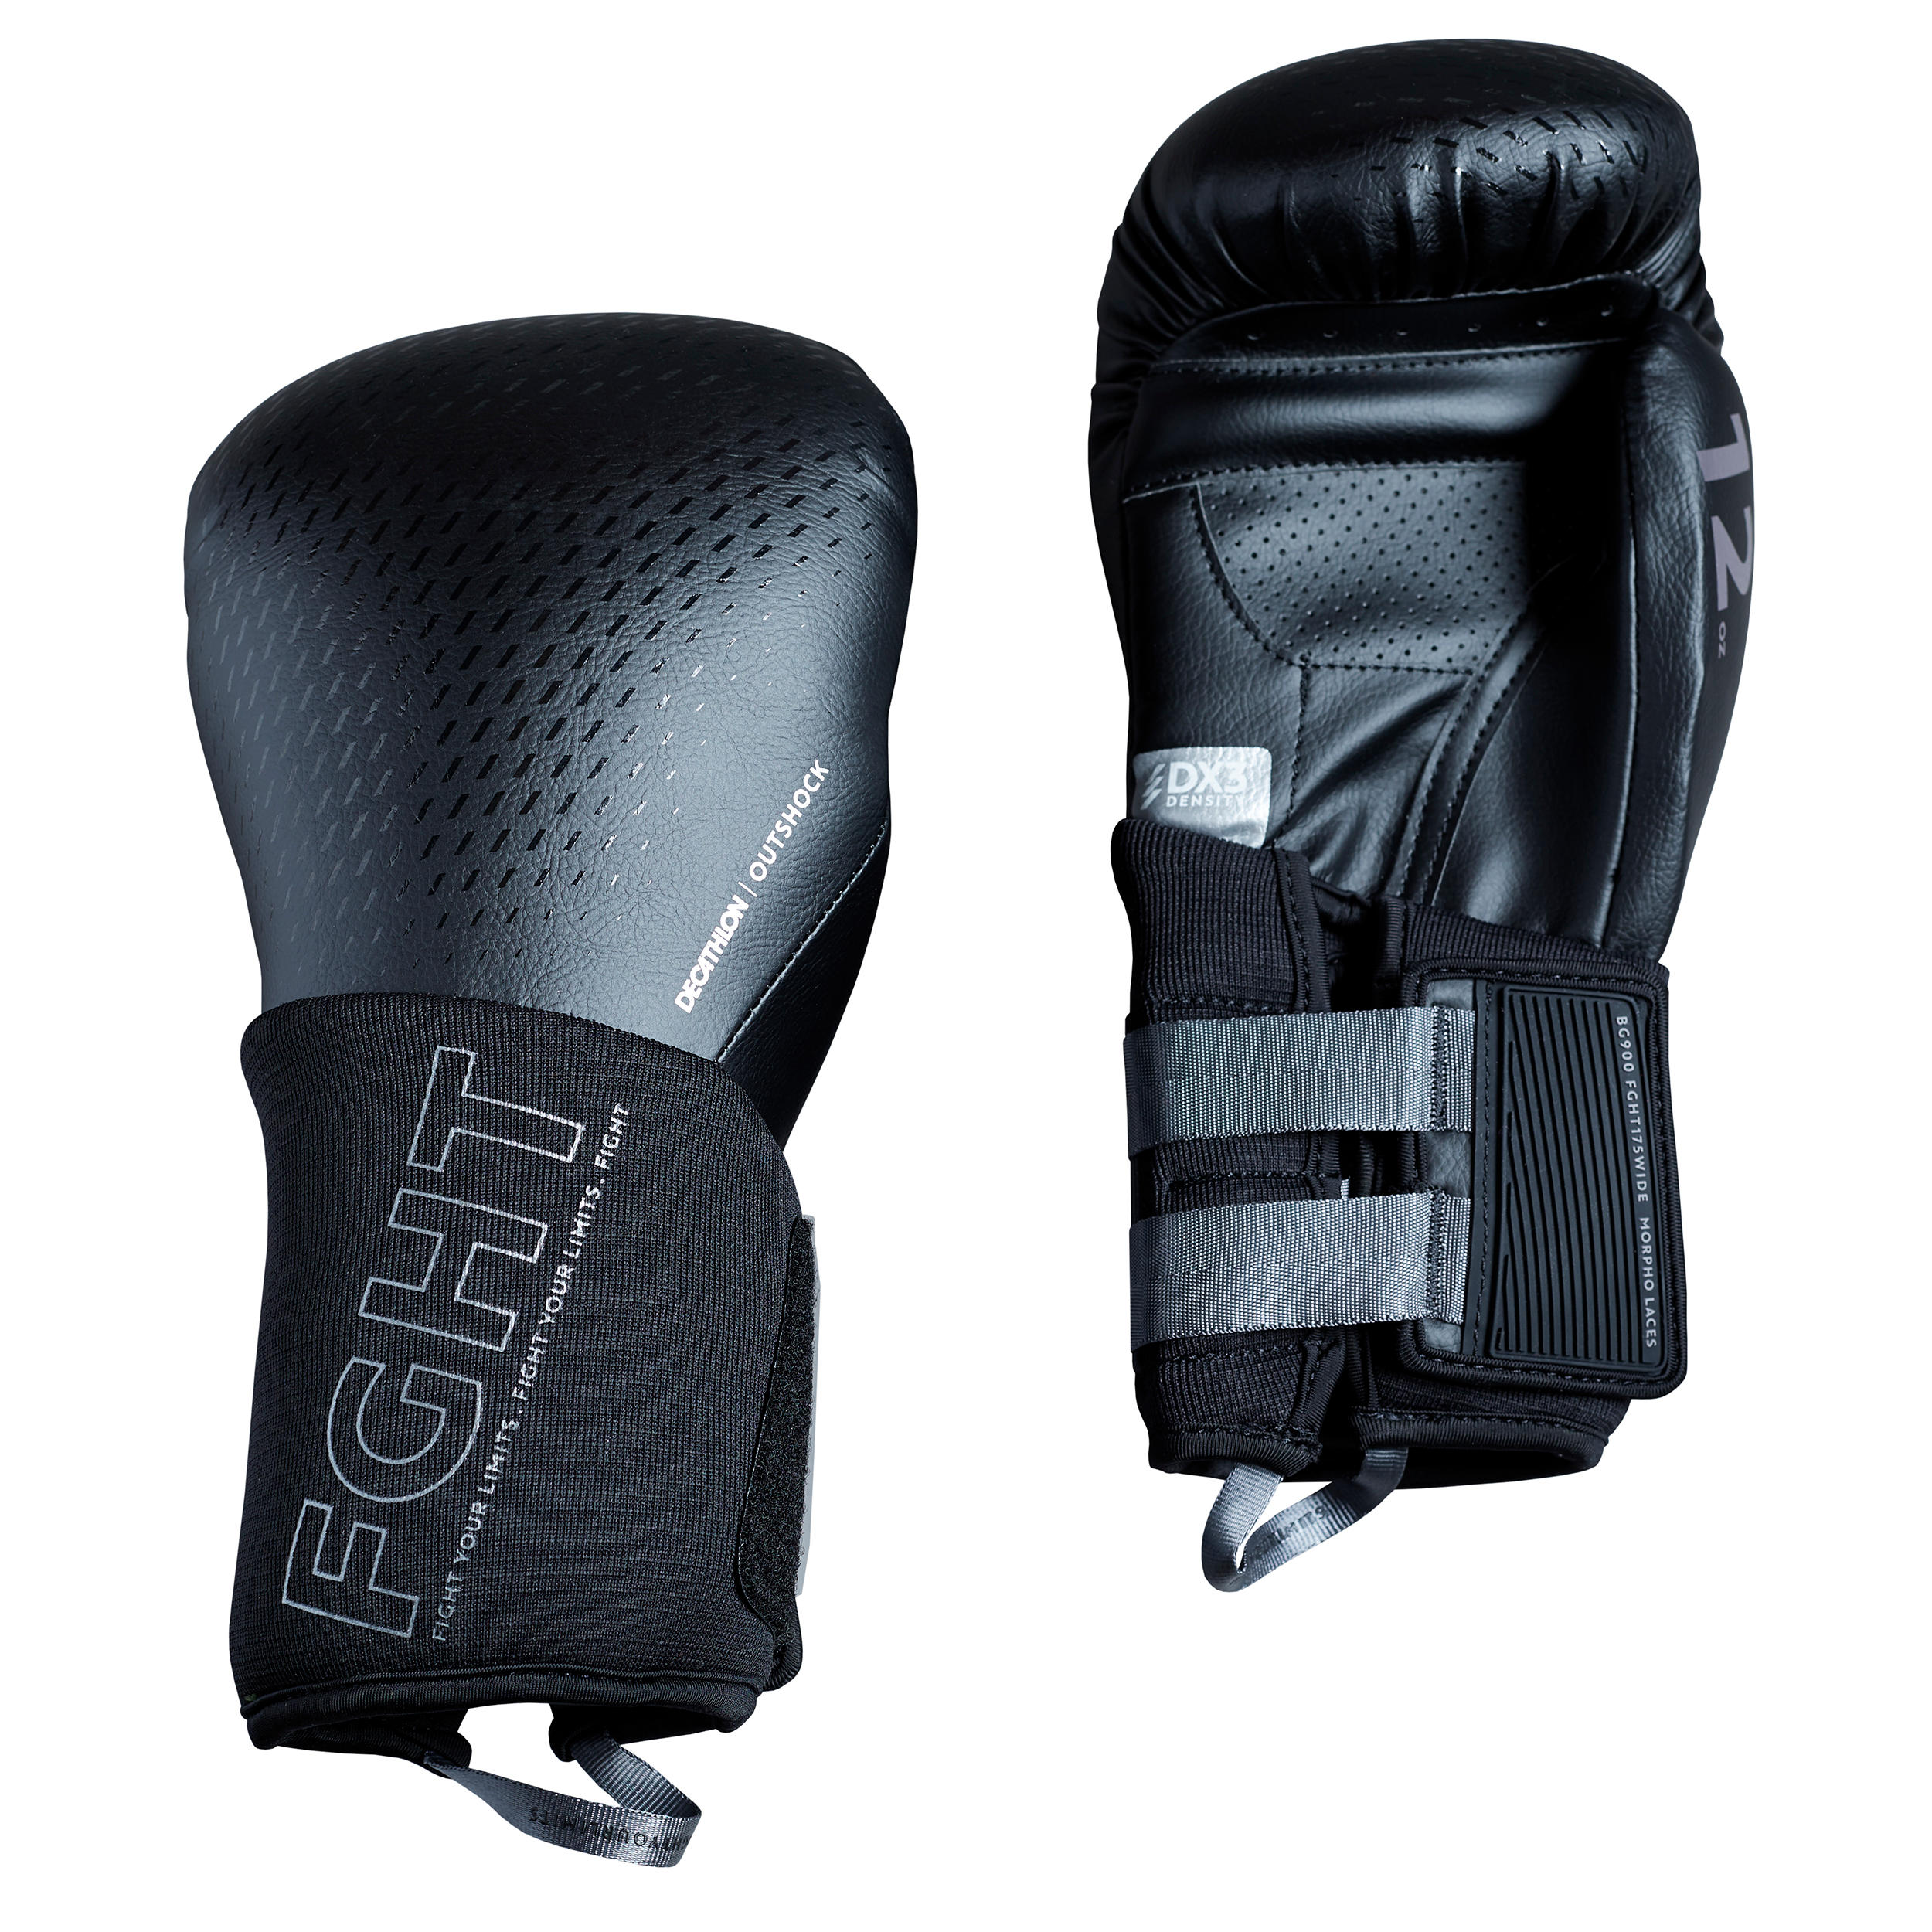 Sparring Boxing Gloves 900 - Black 